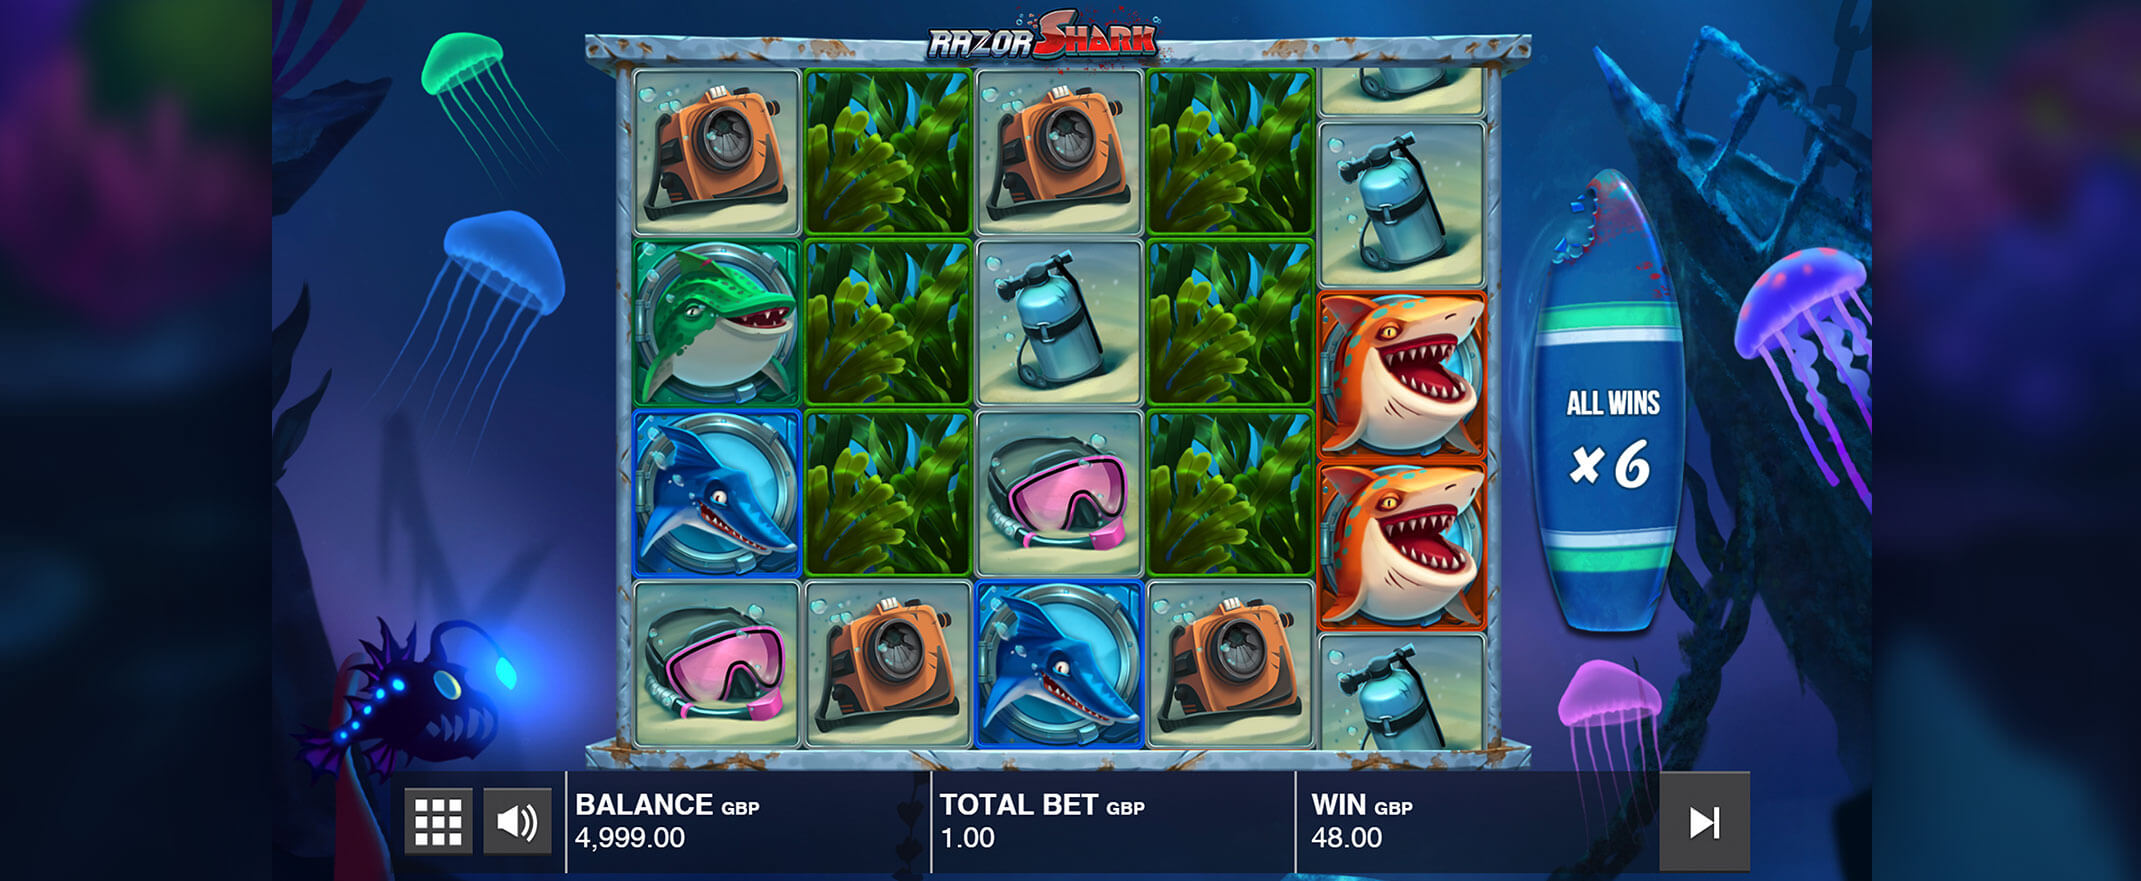 Razor Shark slot screenshot of the reels